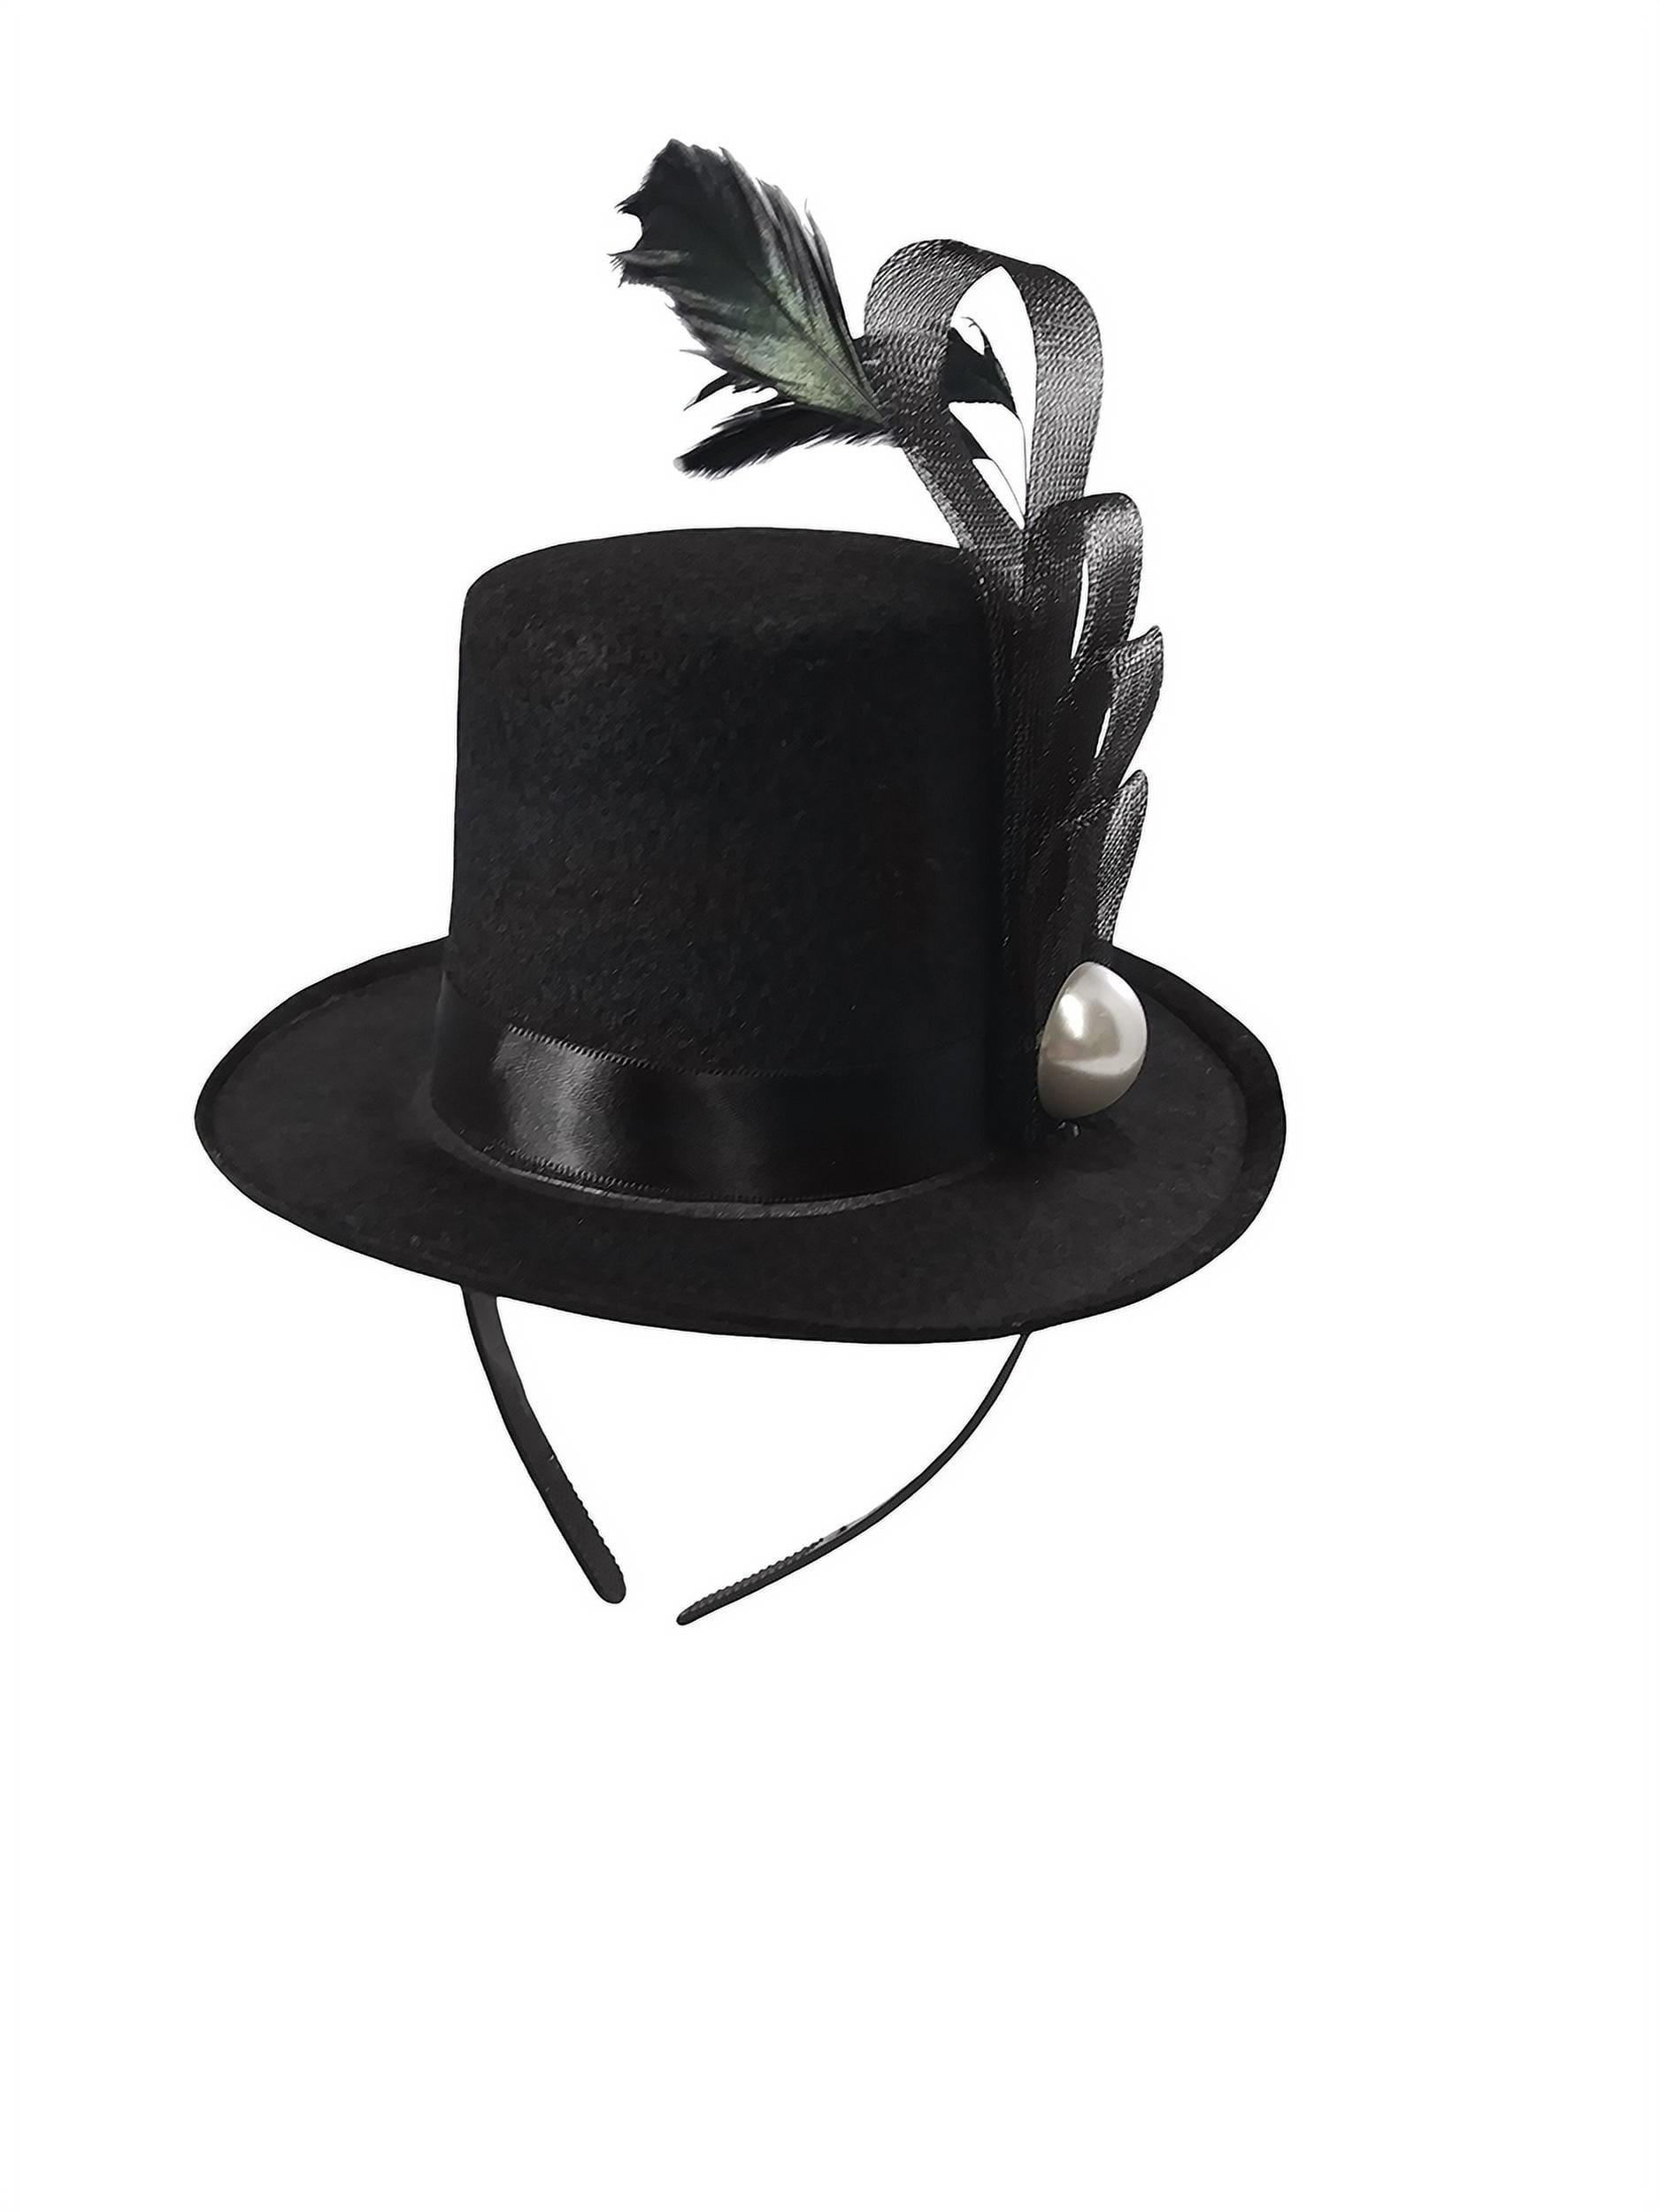 Top Hat Mini Black Sequin Top Hat With Headband Victorian Era Novelty Hat